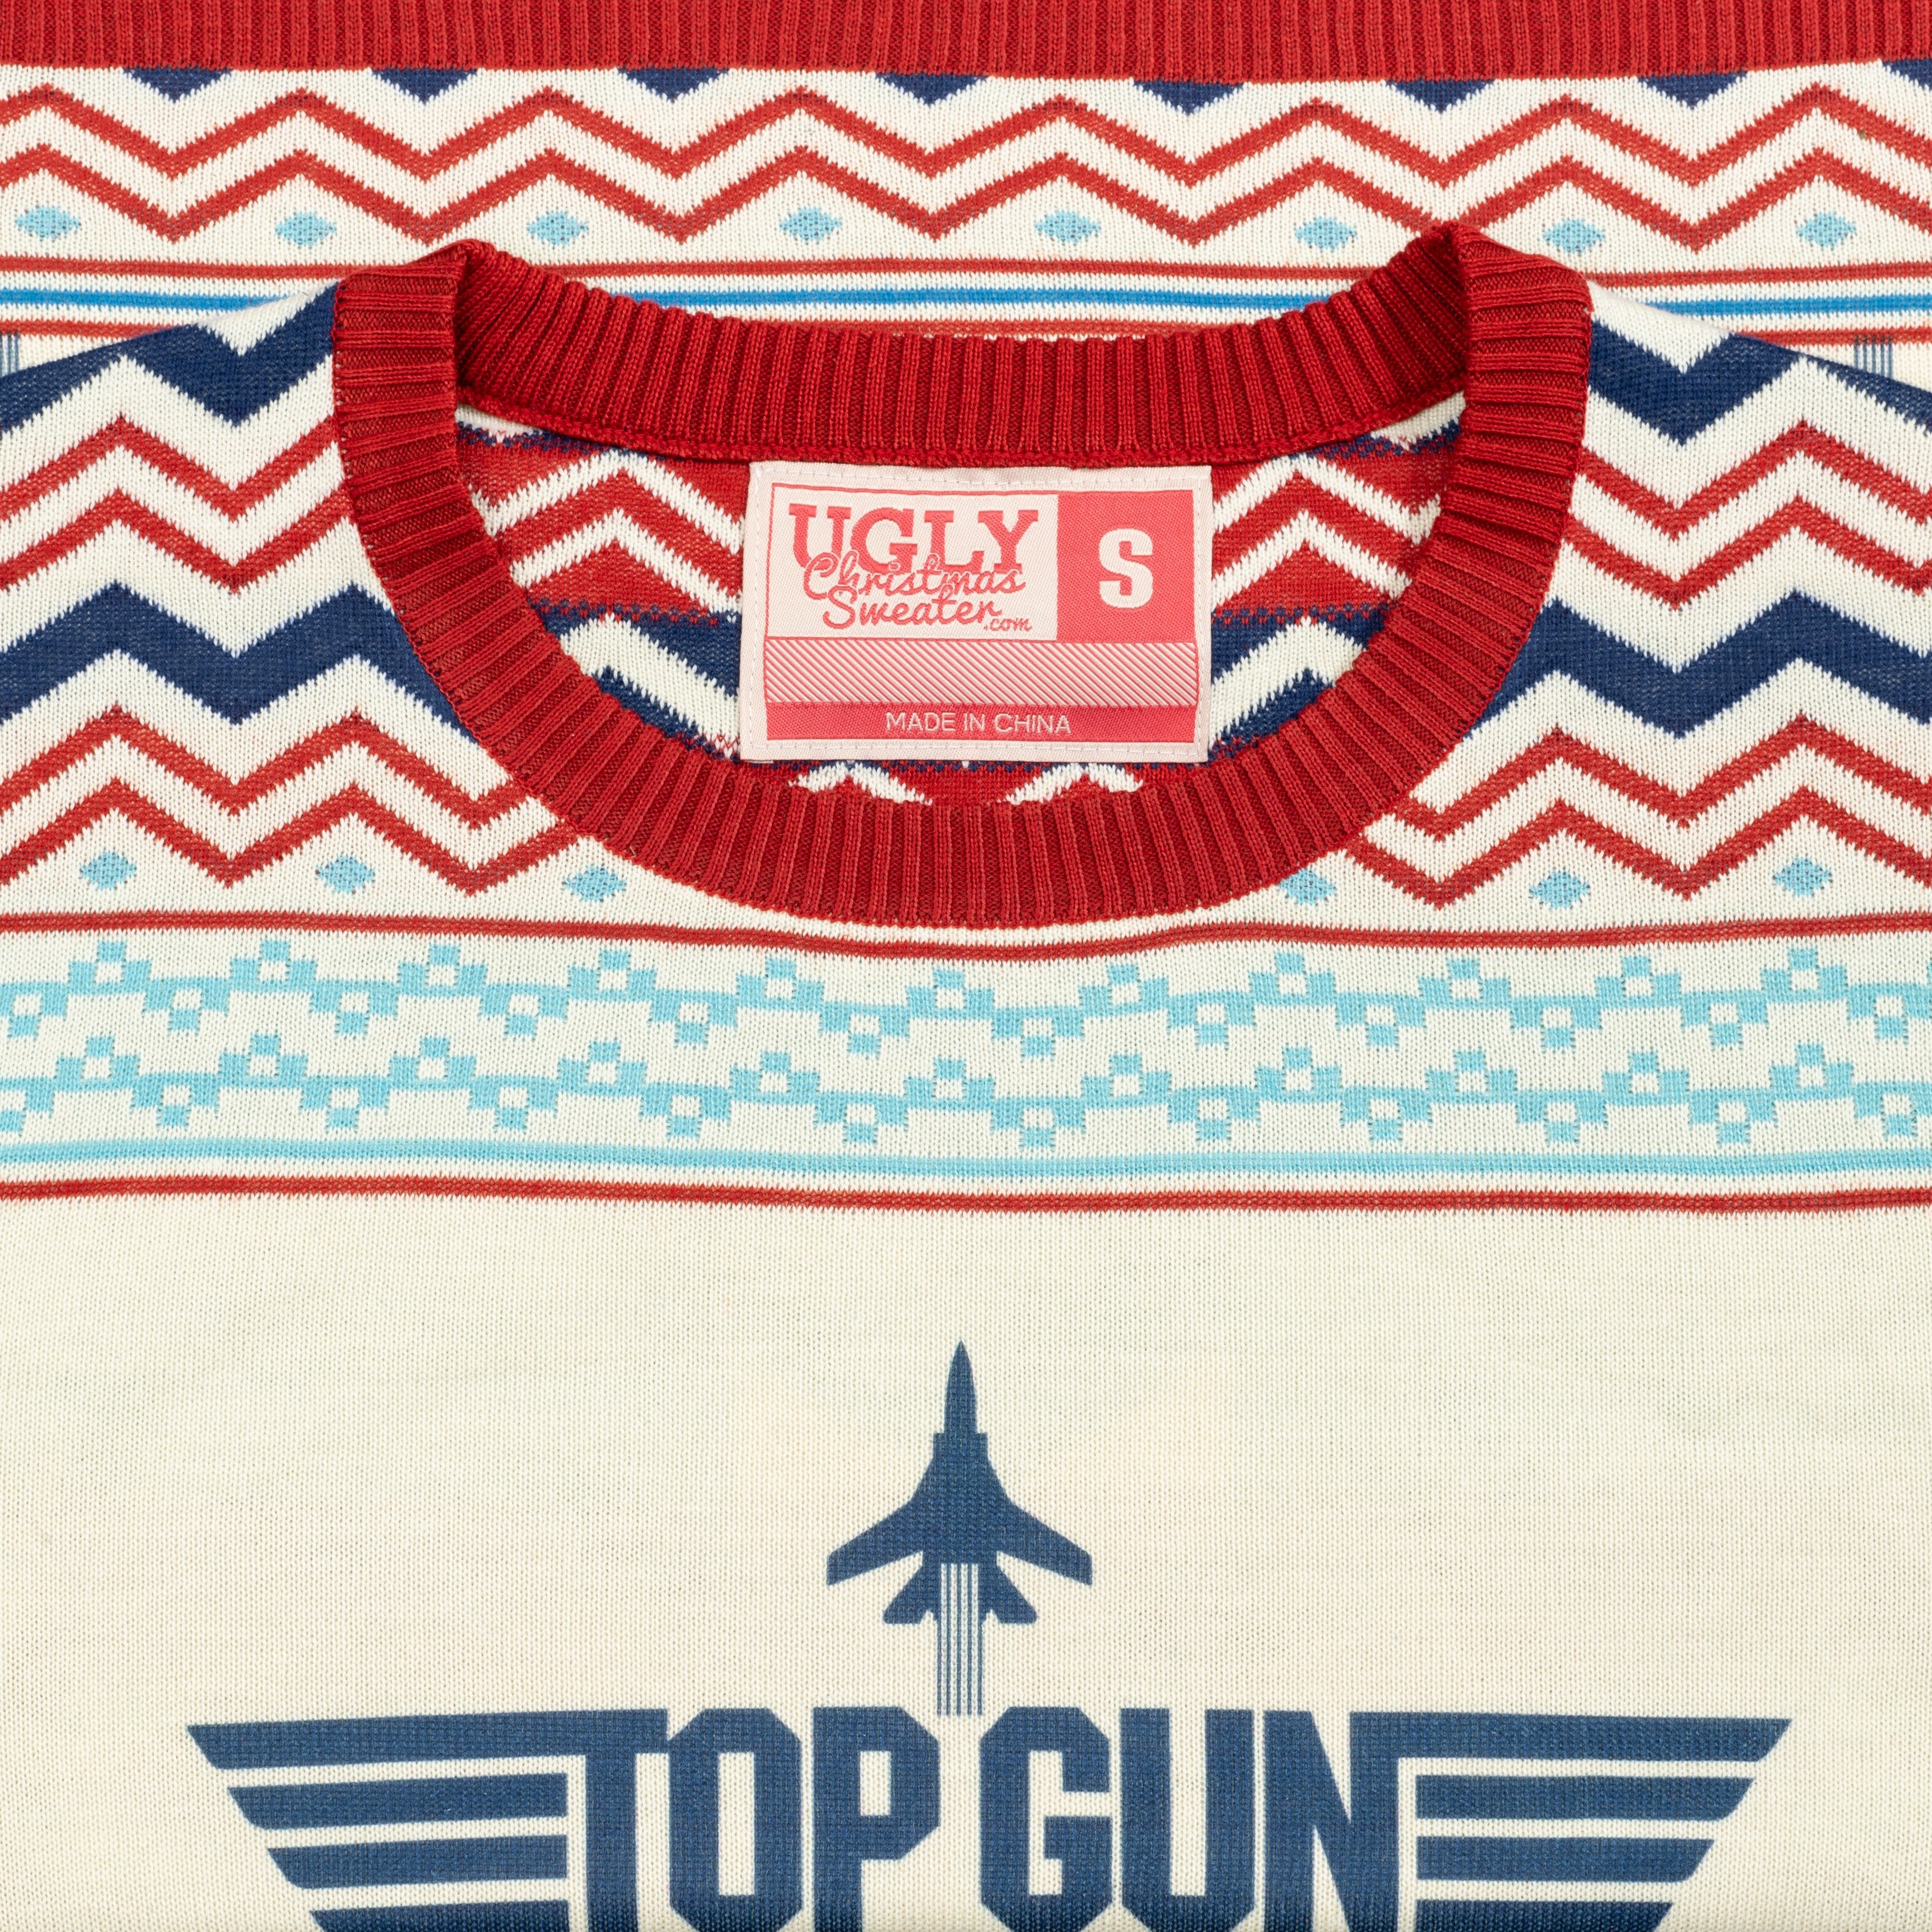 Top Gun Logo Christmas Sweater